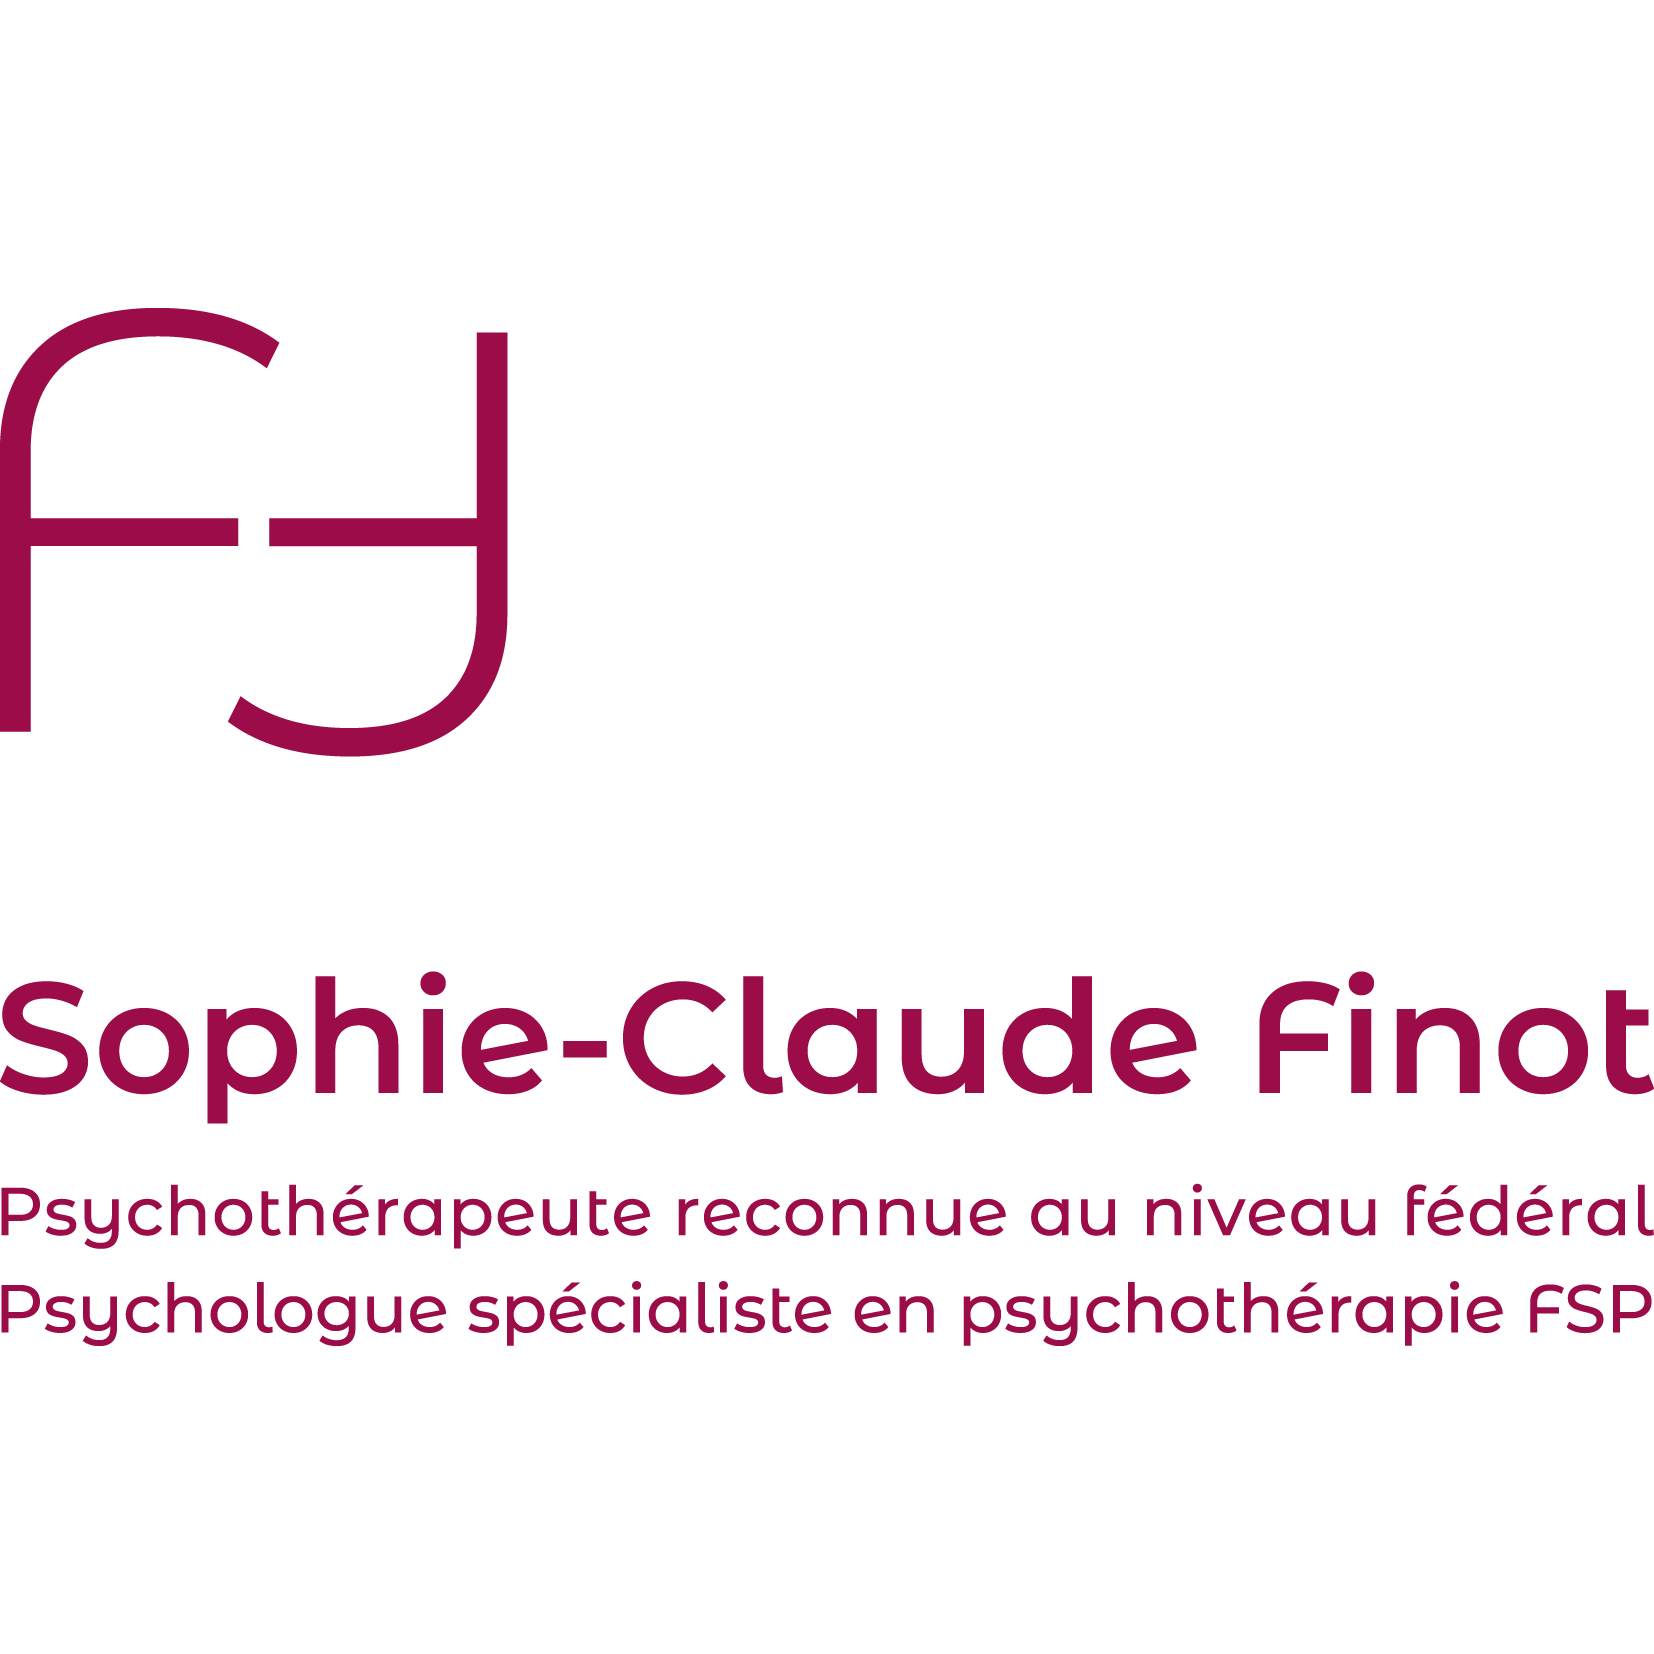 Finot Sophie-Claude Logo